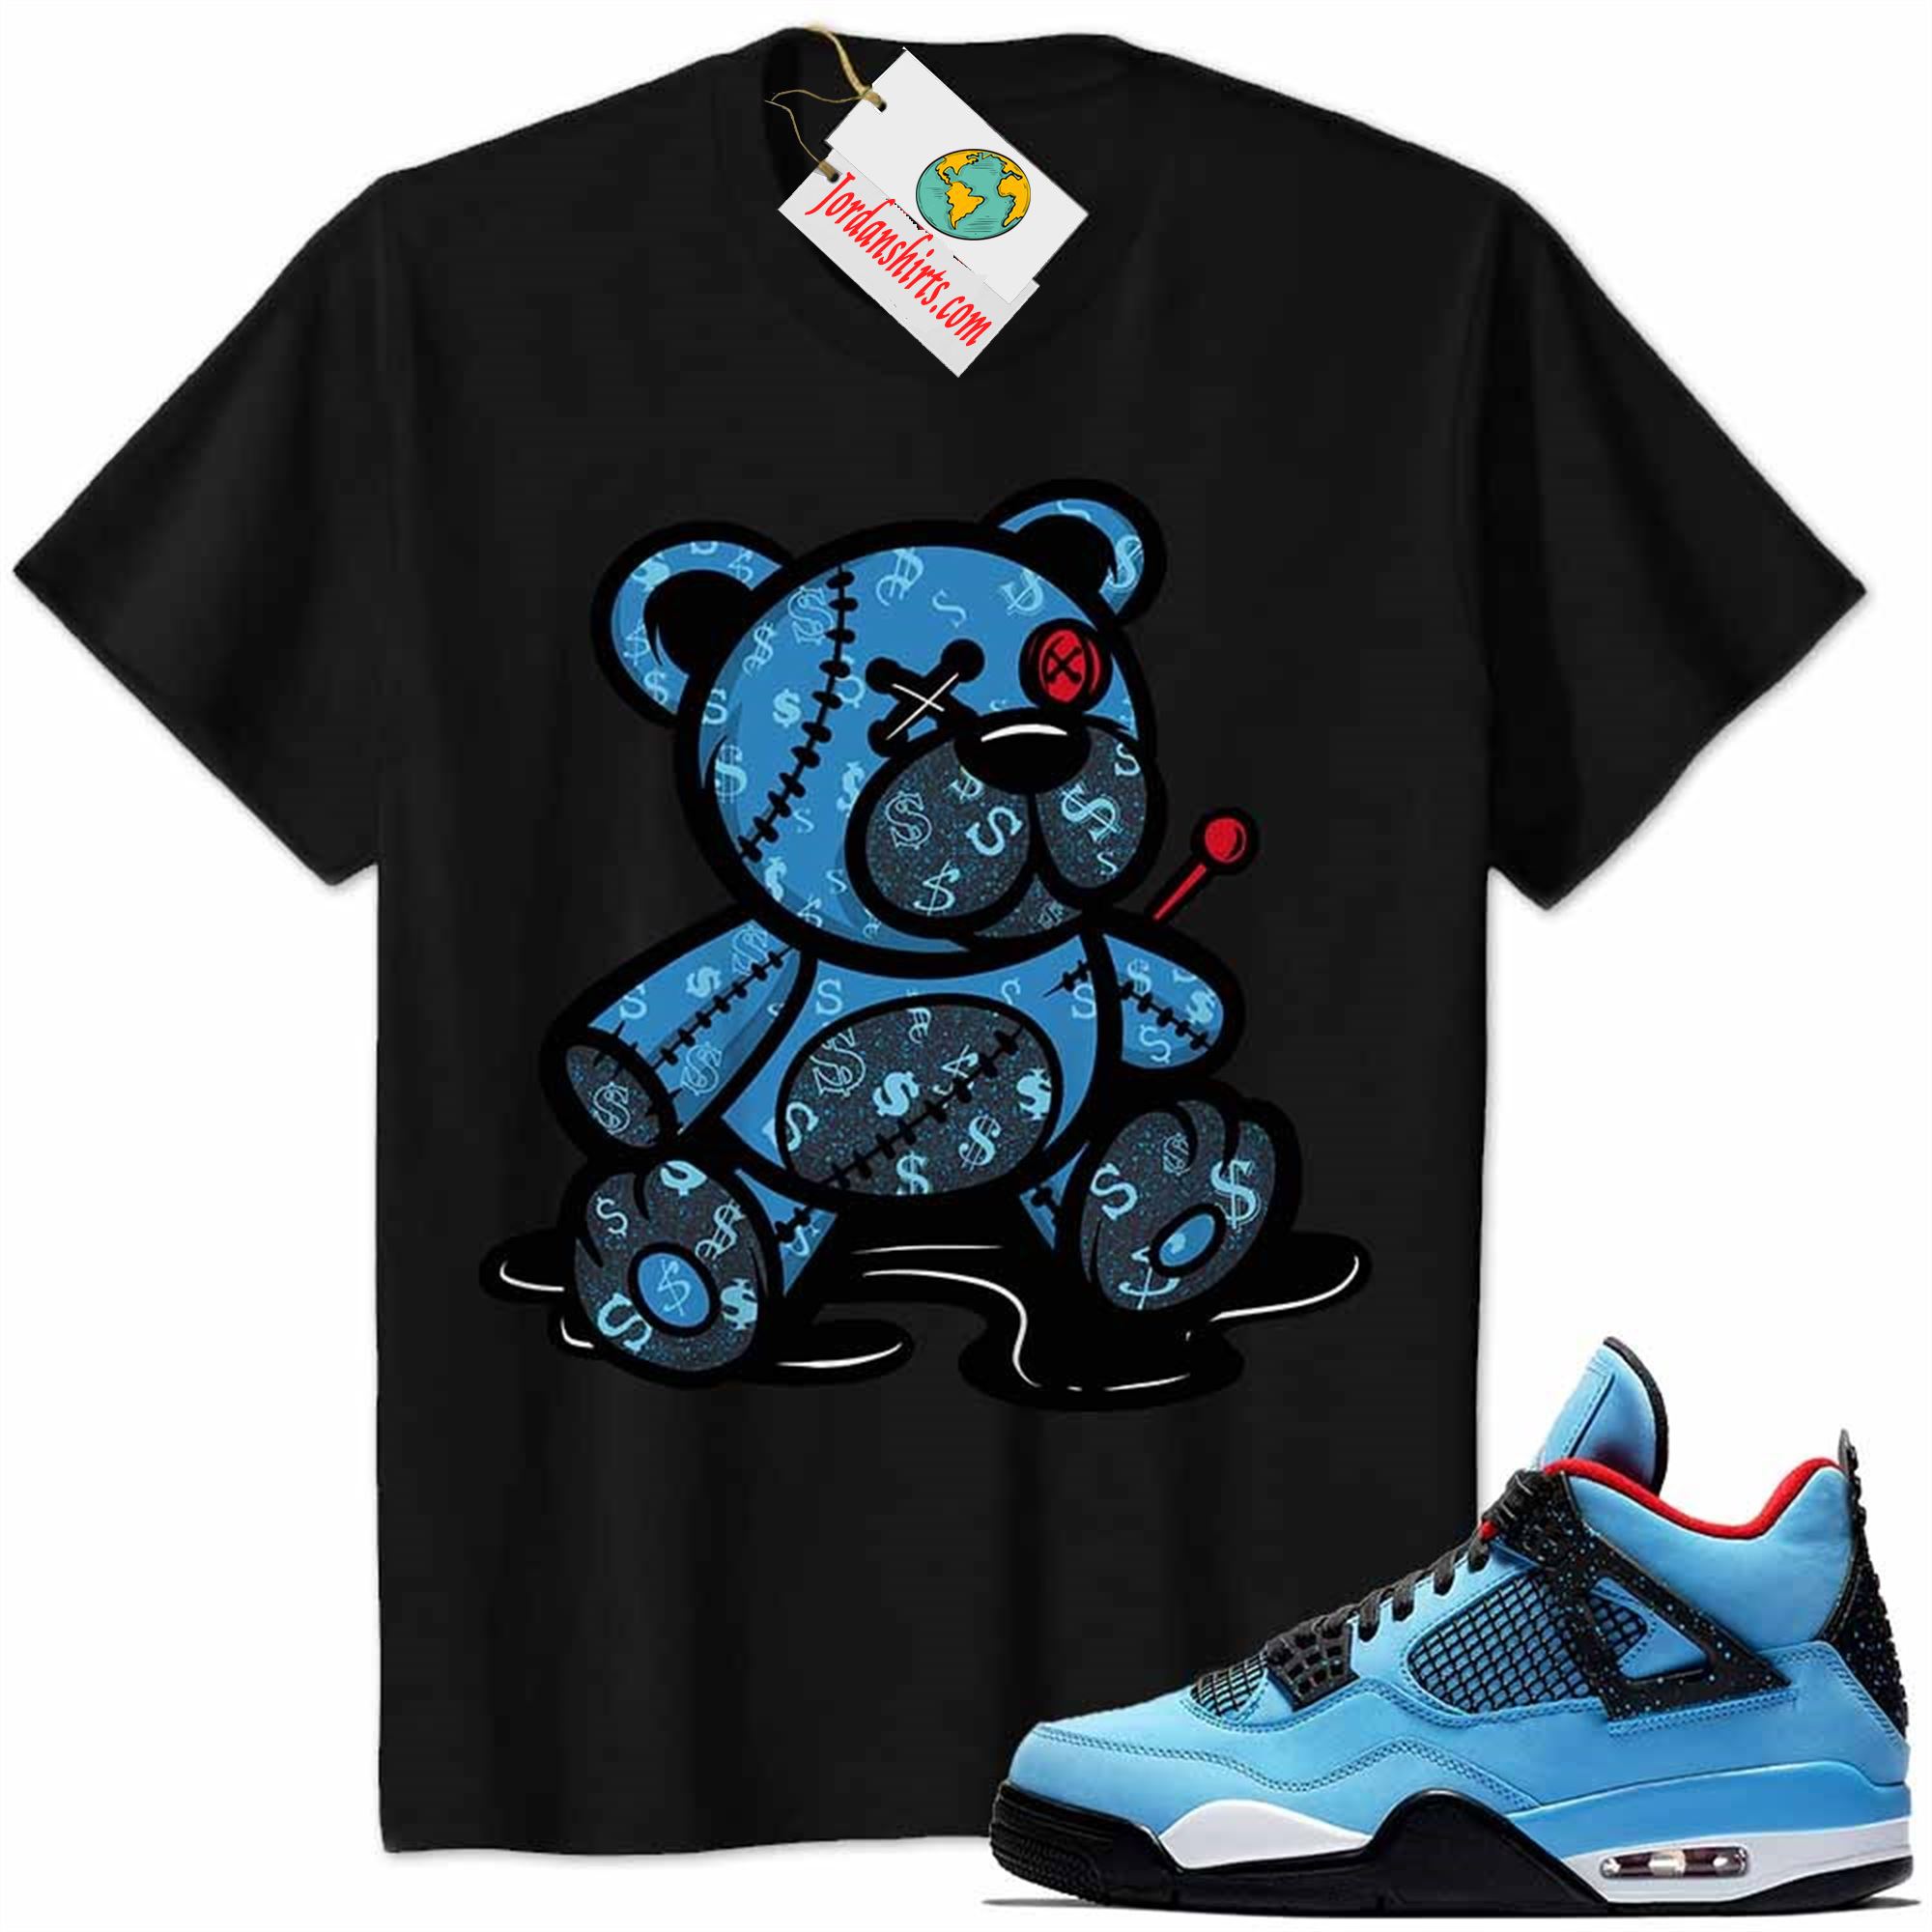 Jordan 4 Shirt, Jordan 4 Cactus Jack Travis Scott Shirt Teddy Bear All Money In Black Plus Size Up To 5xl